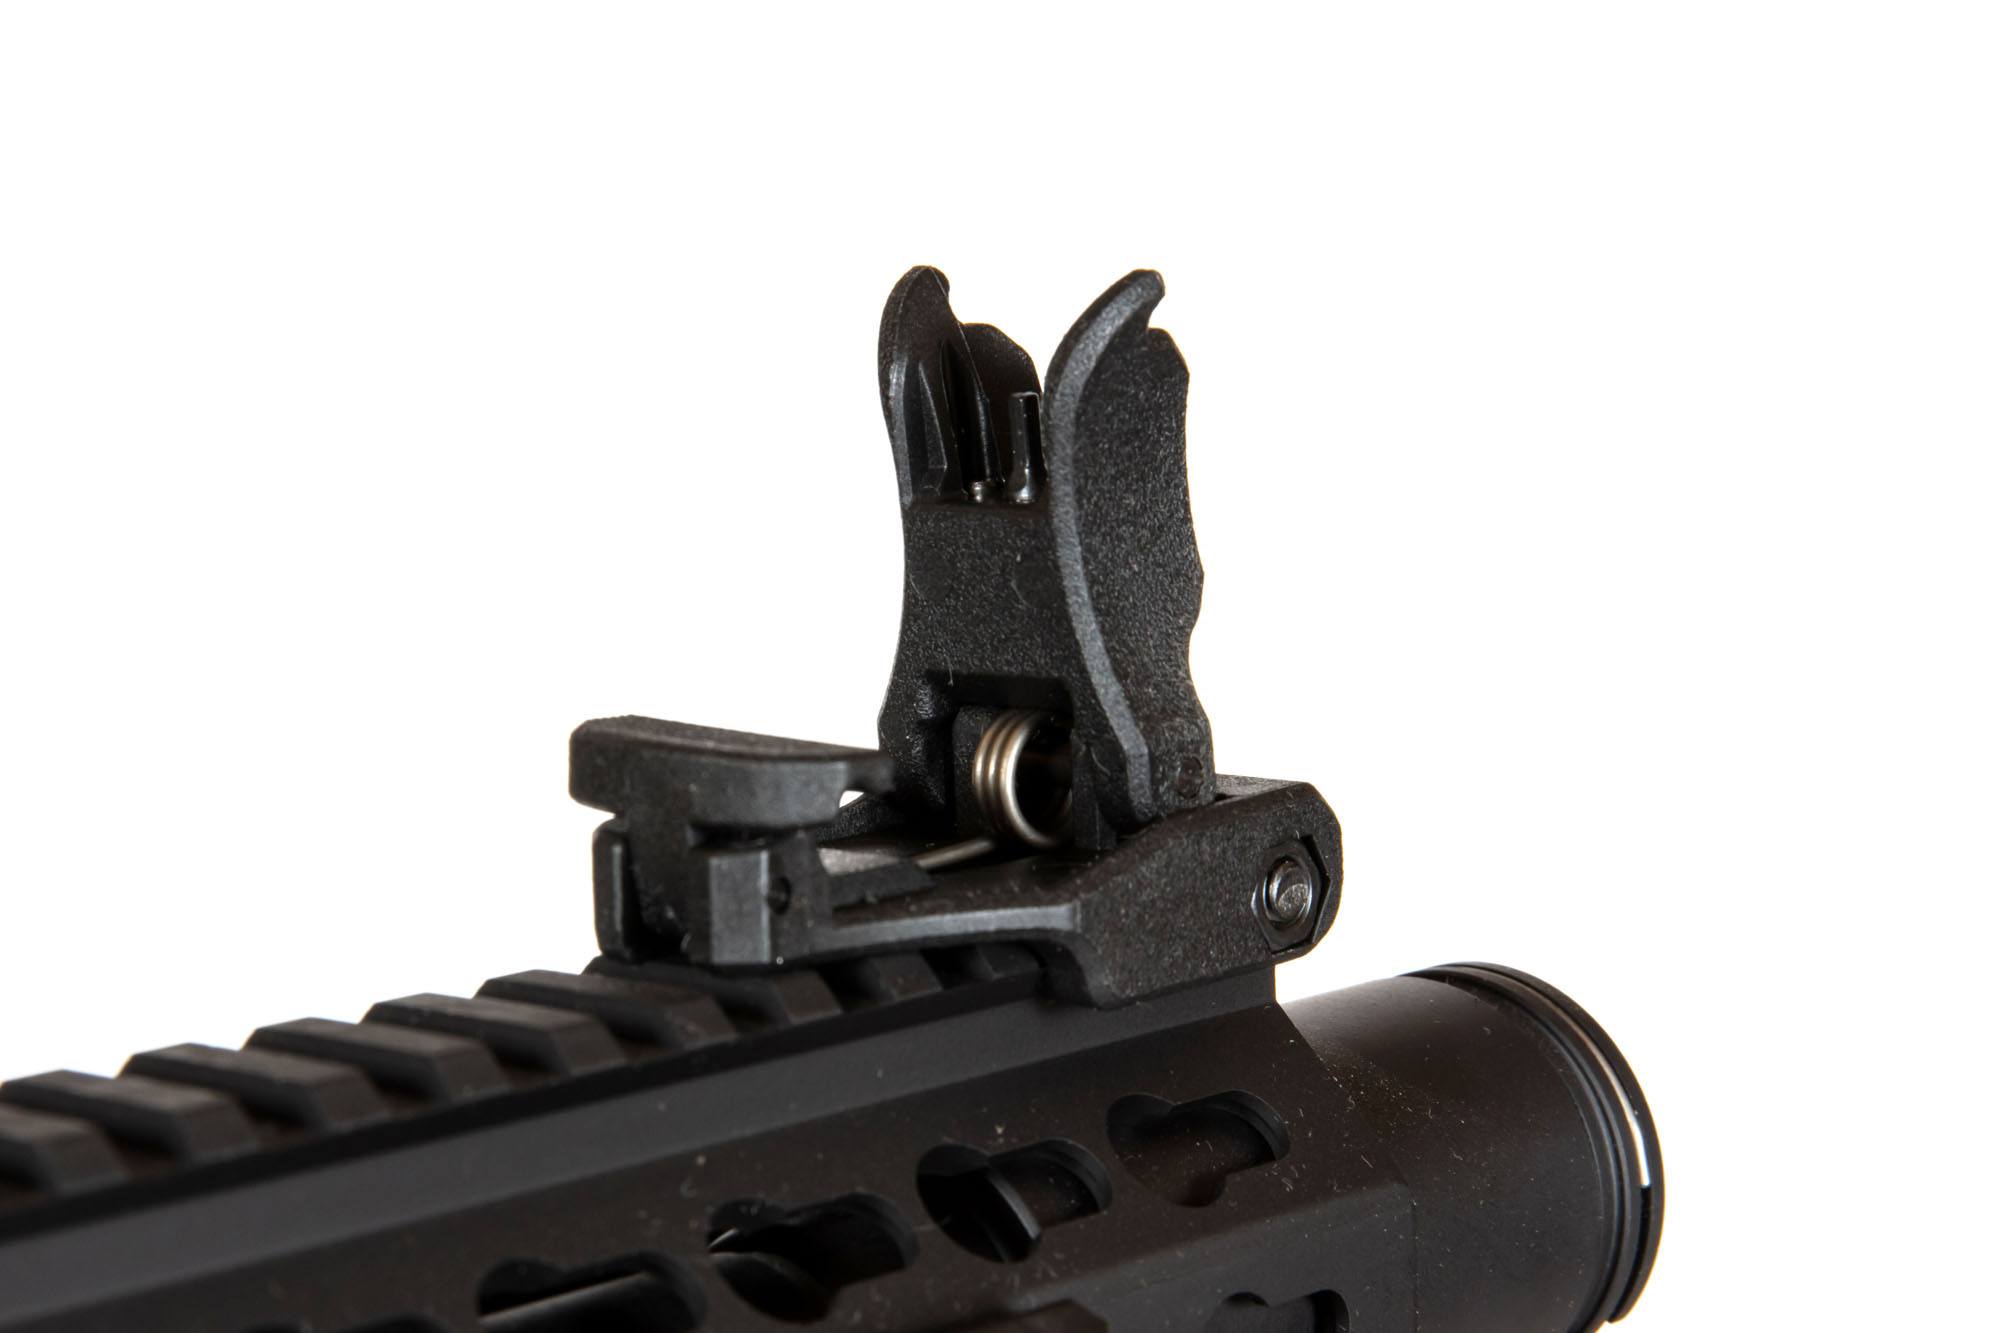 SA-C07 PDW CORE™ Carbine - black